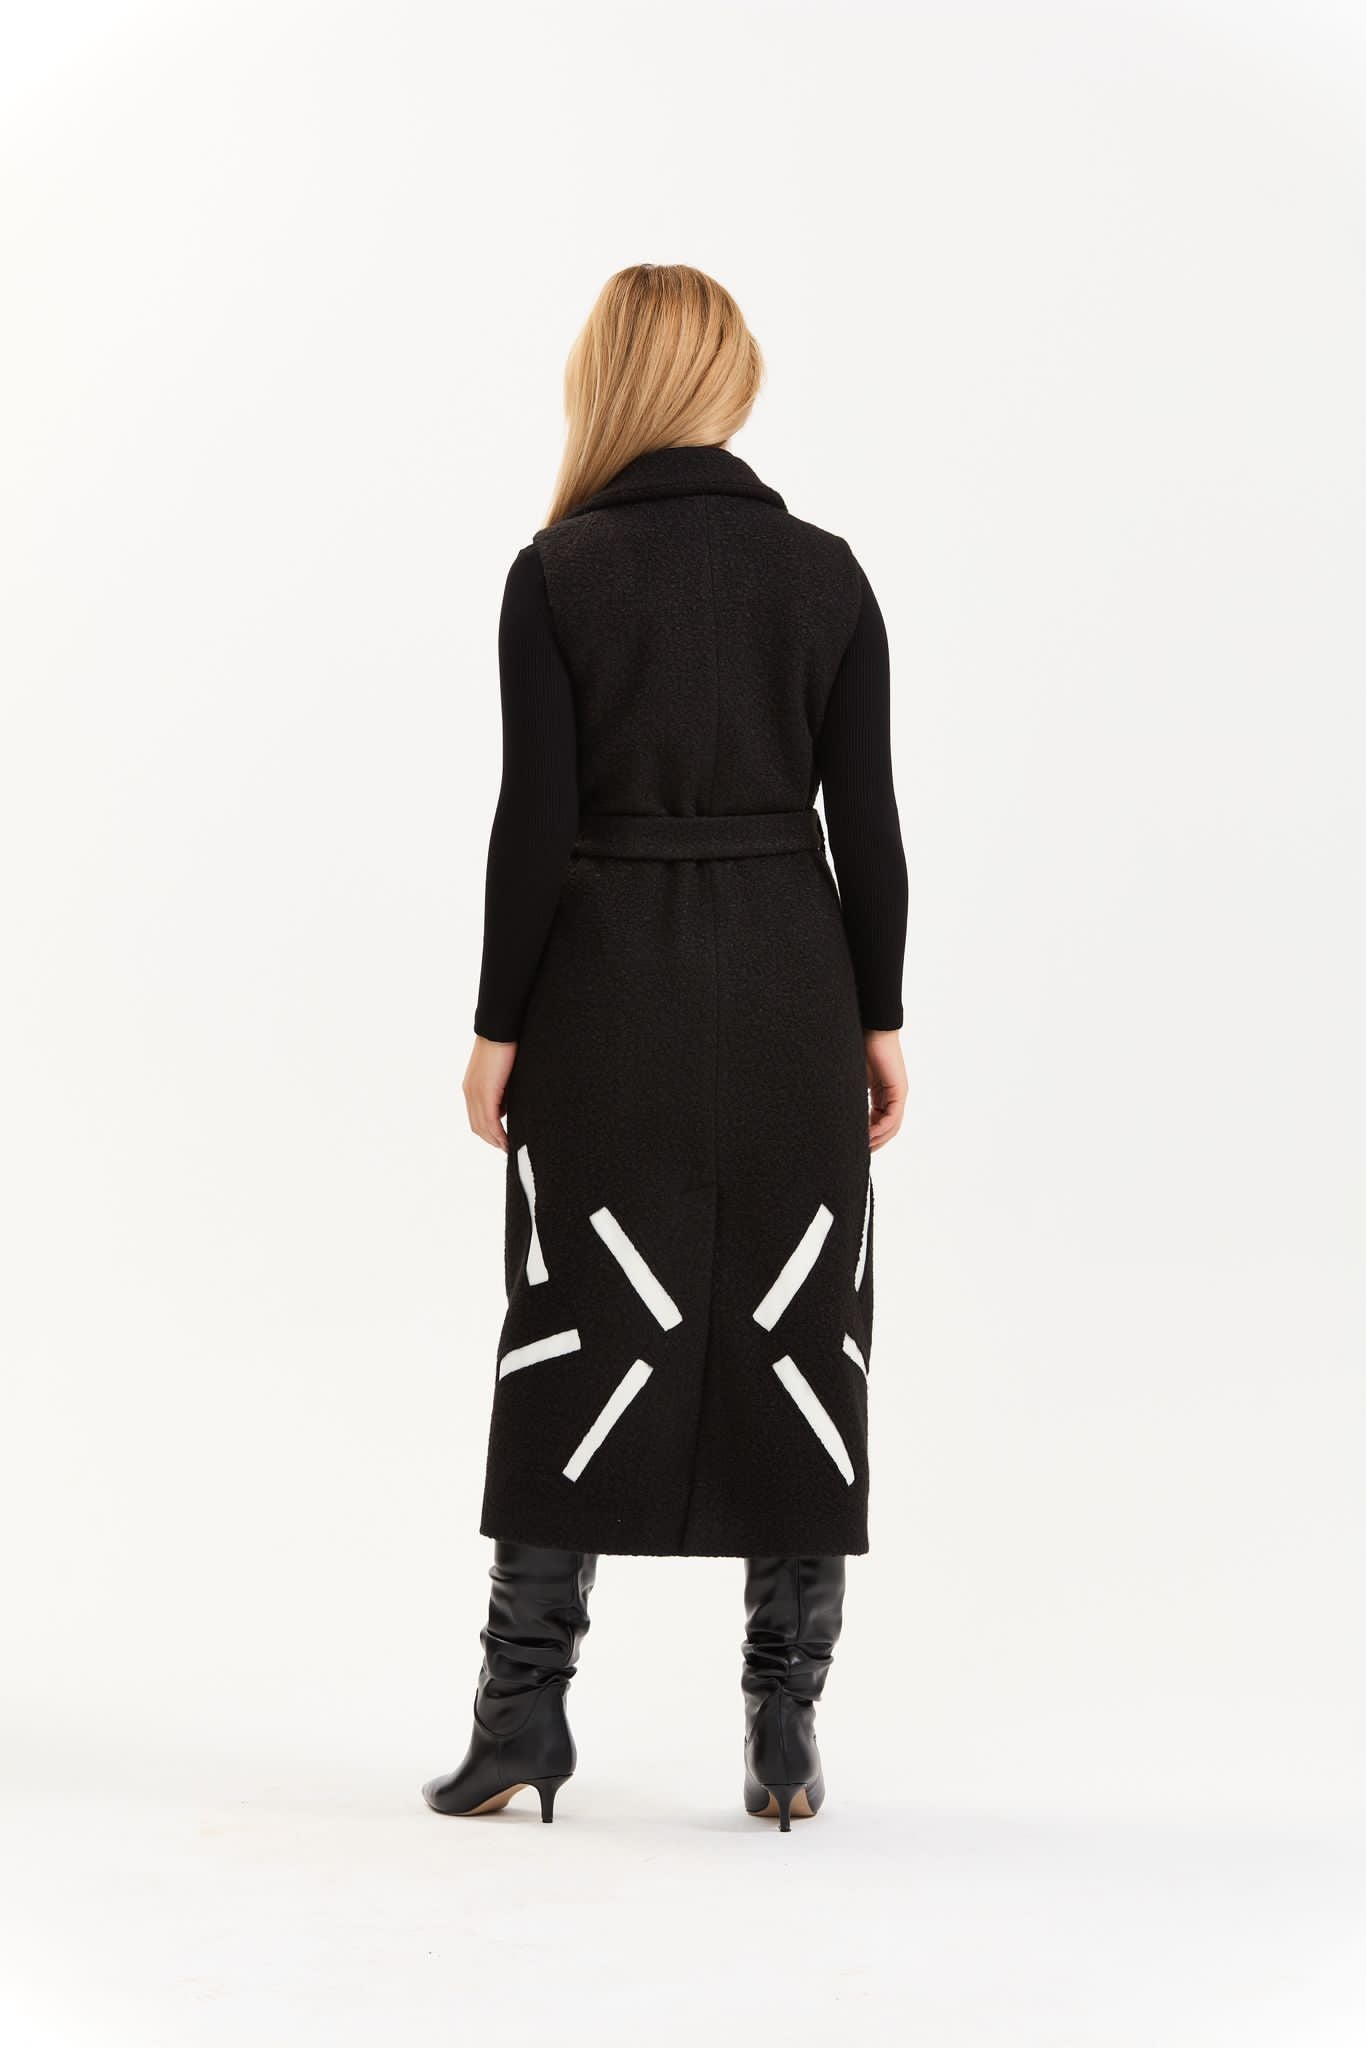 Designer Sleeveless Jacket Cardigan Wool Design B-11 - Black